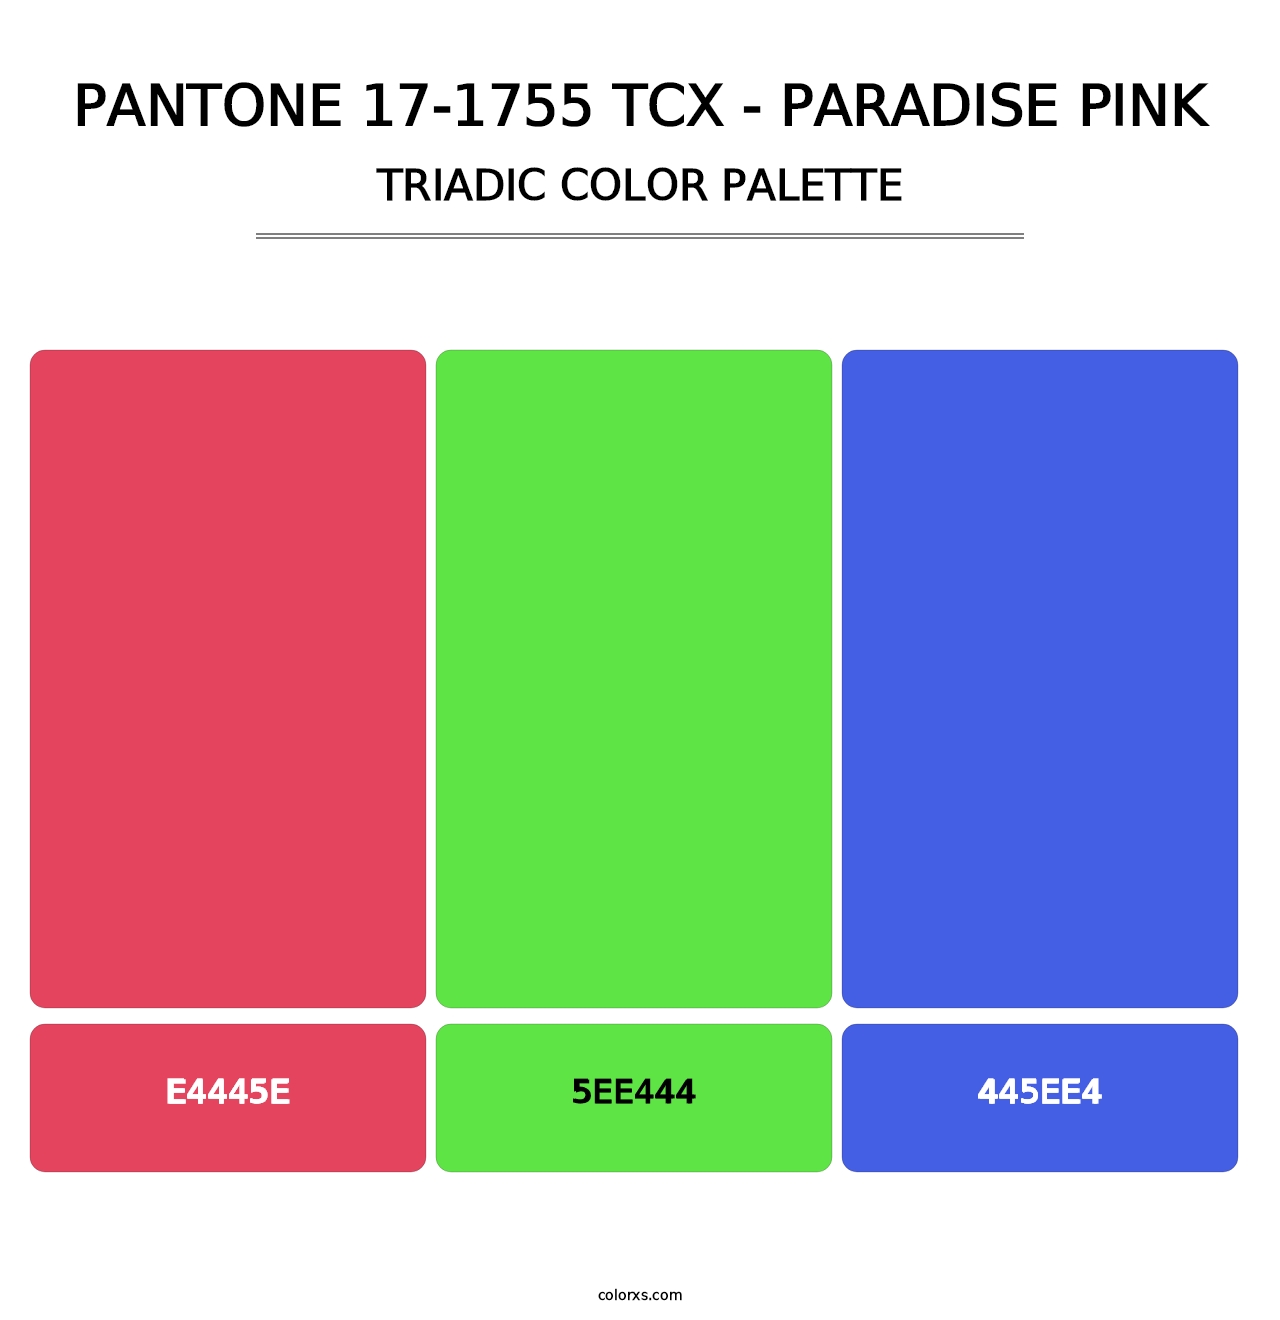 PANTONE 17-1755 TCX - Paradise Pink - Triadic Color Palette